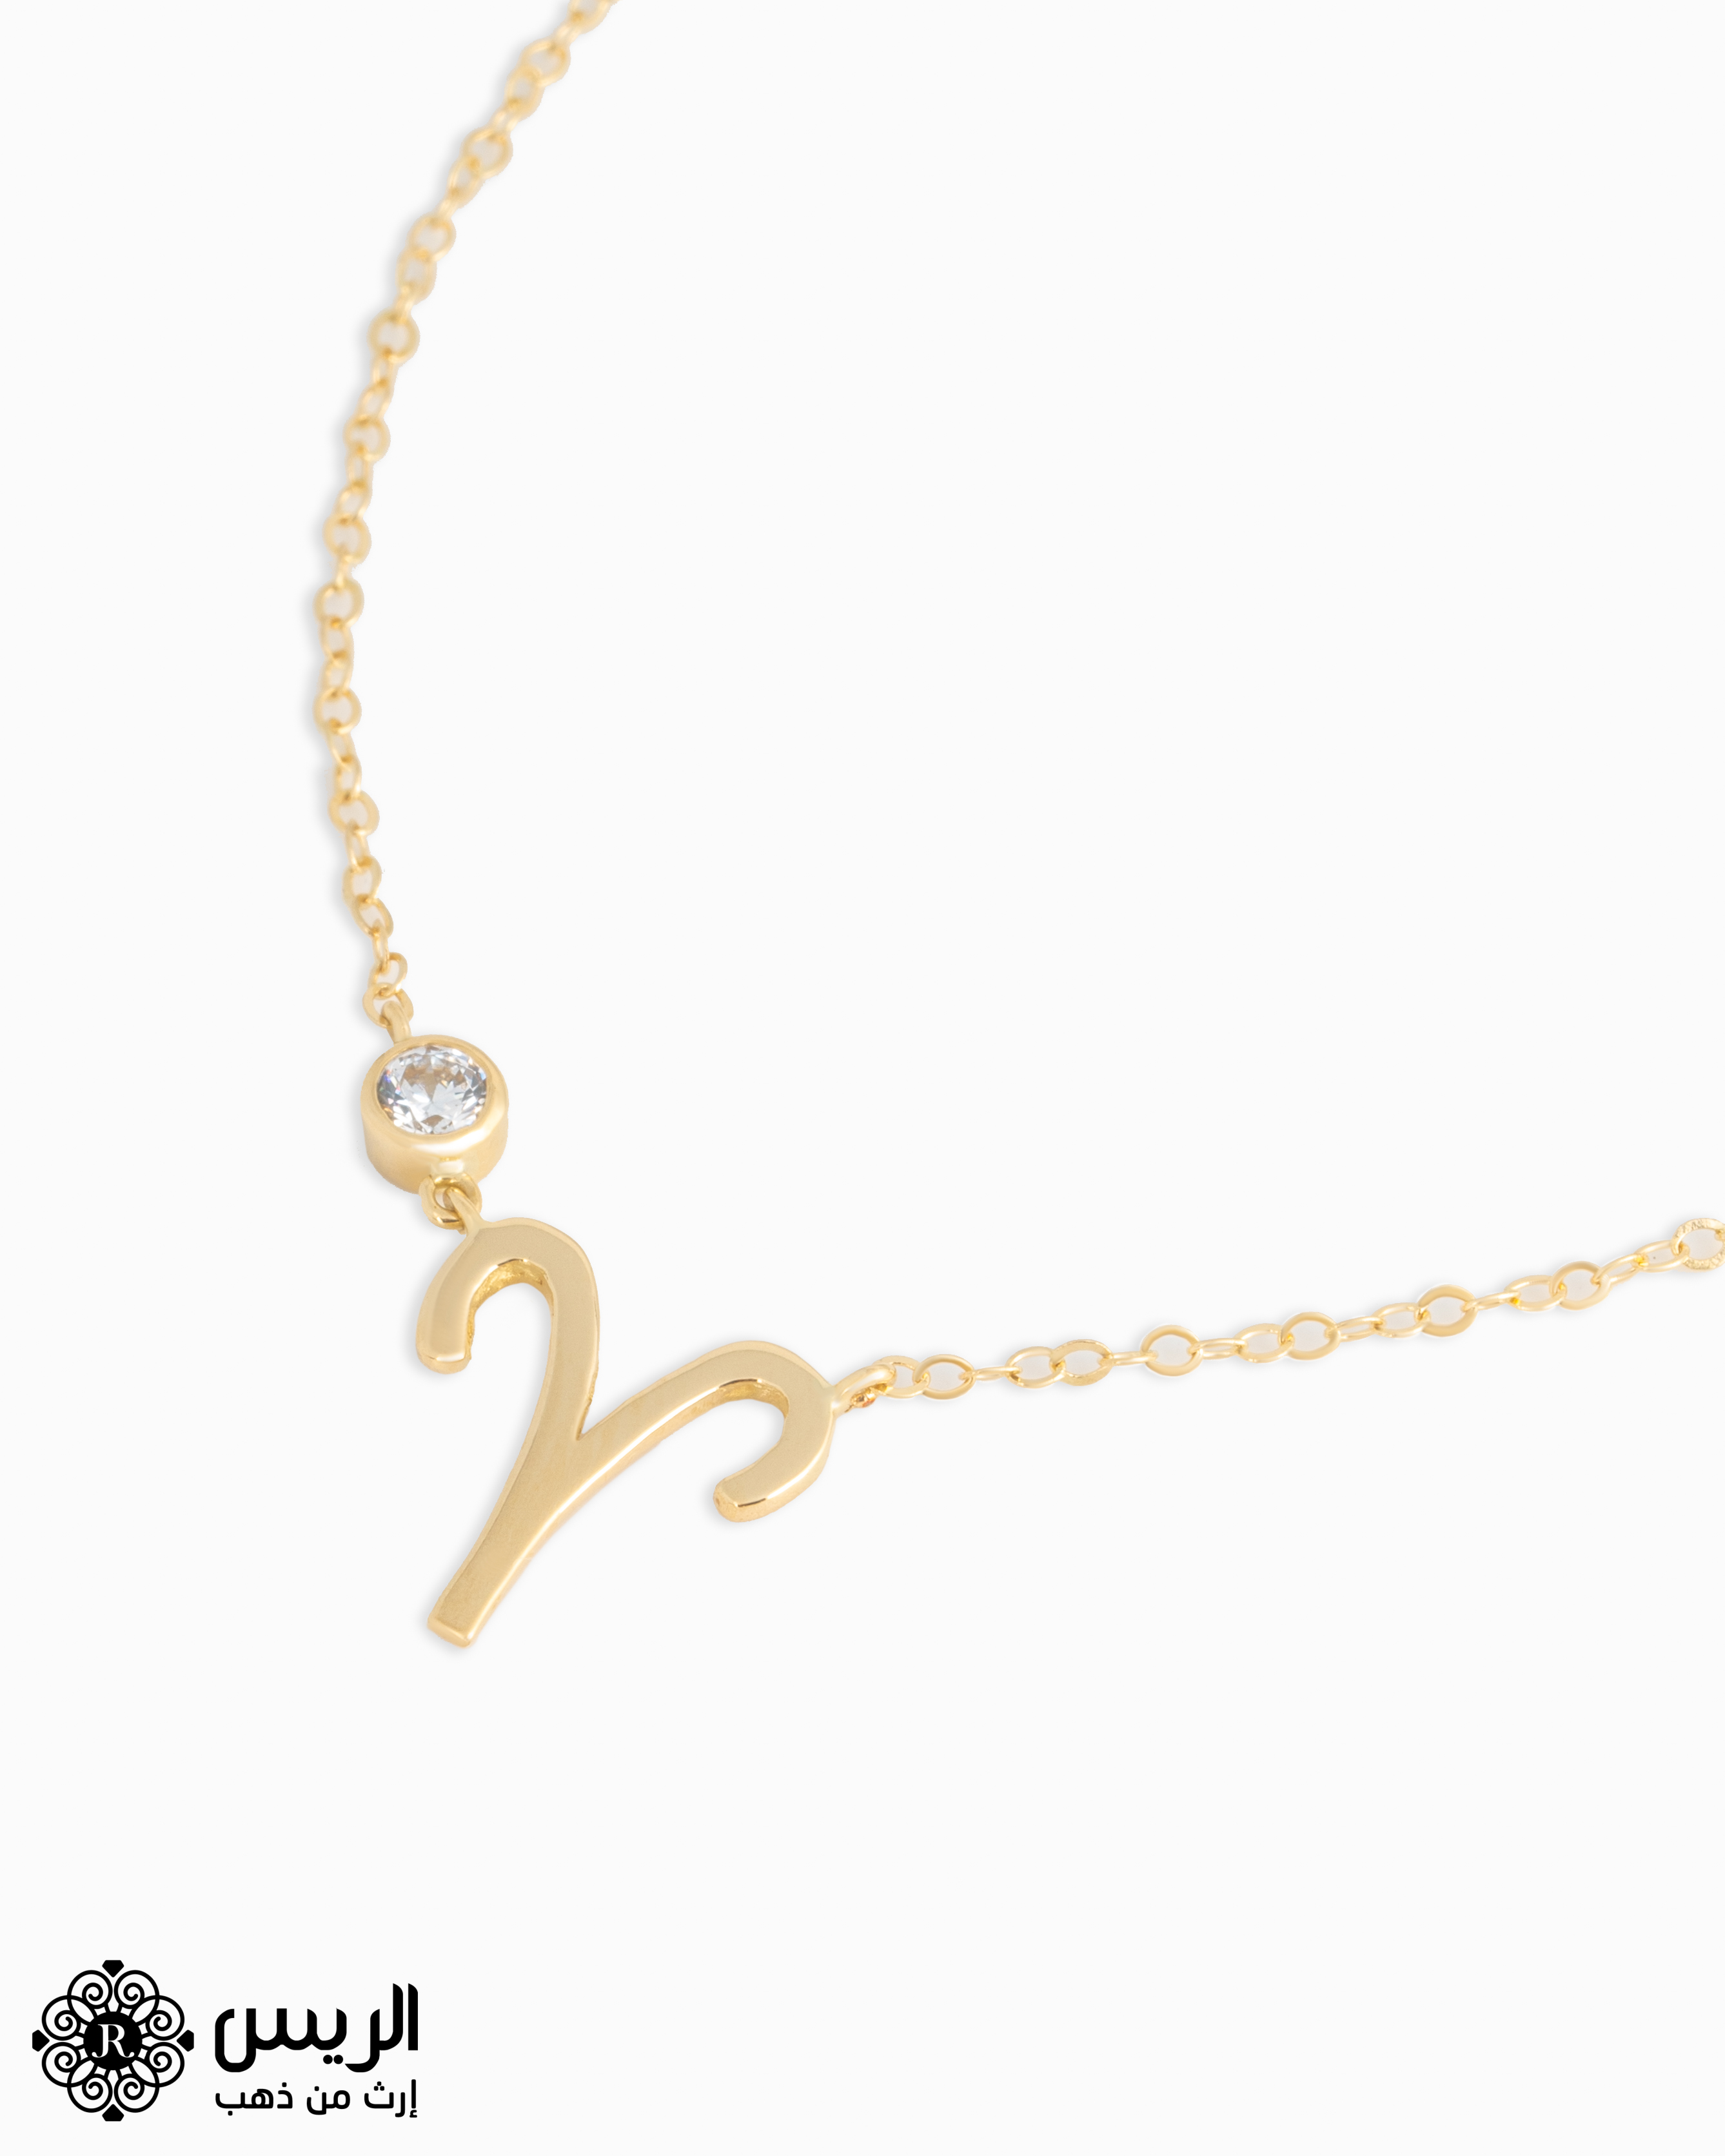 Raies jewelry Aries Horoscope Pendant تعليقة برج الحمل الريس للمجوهرات